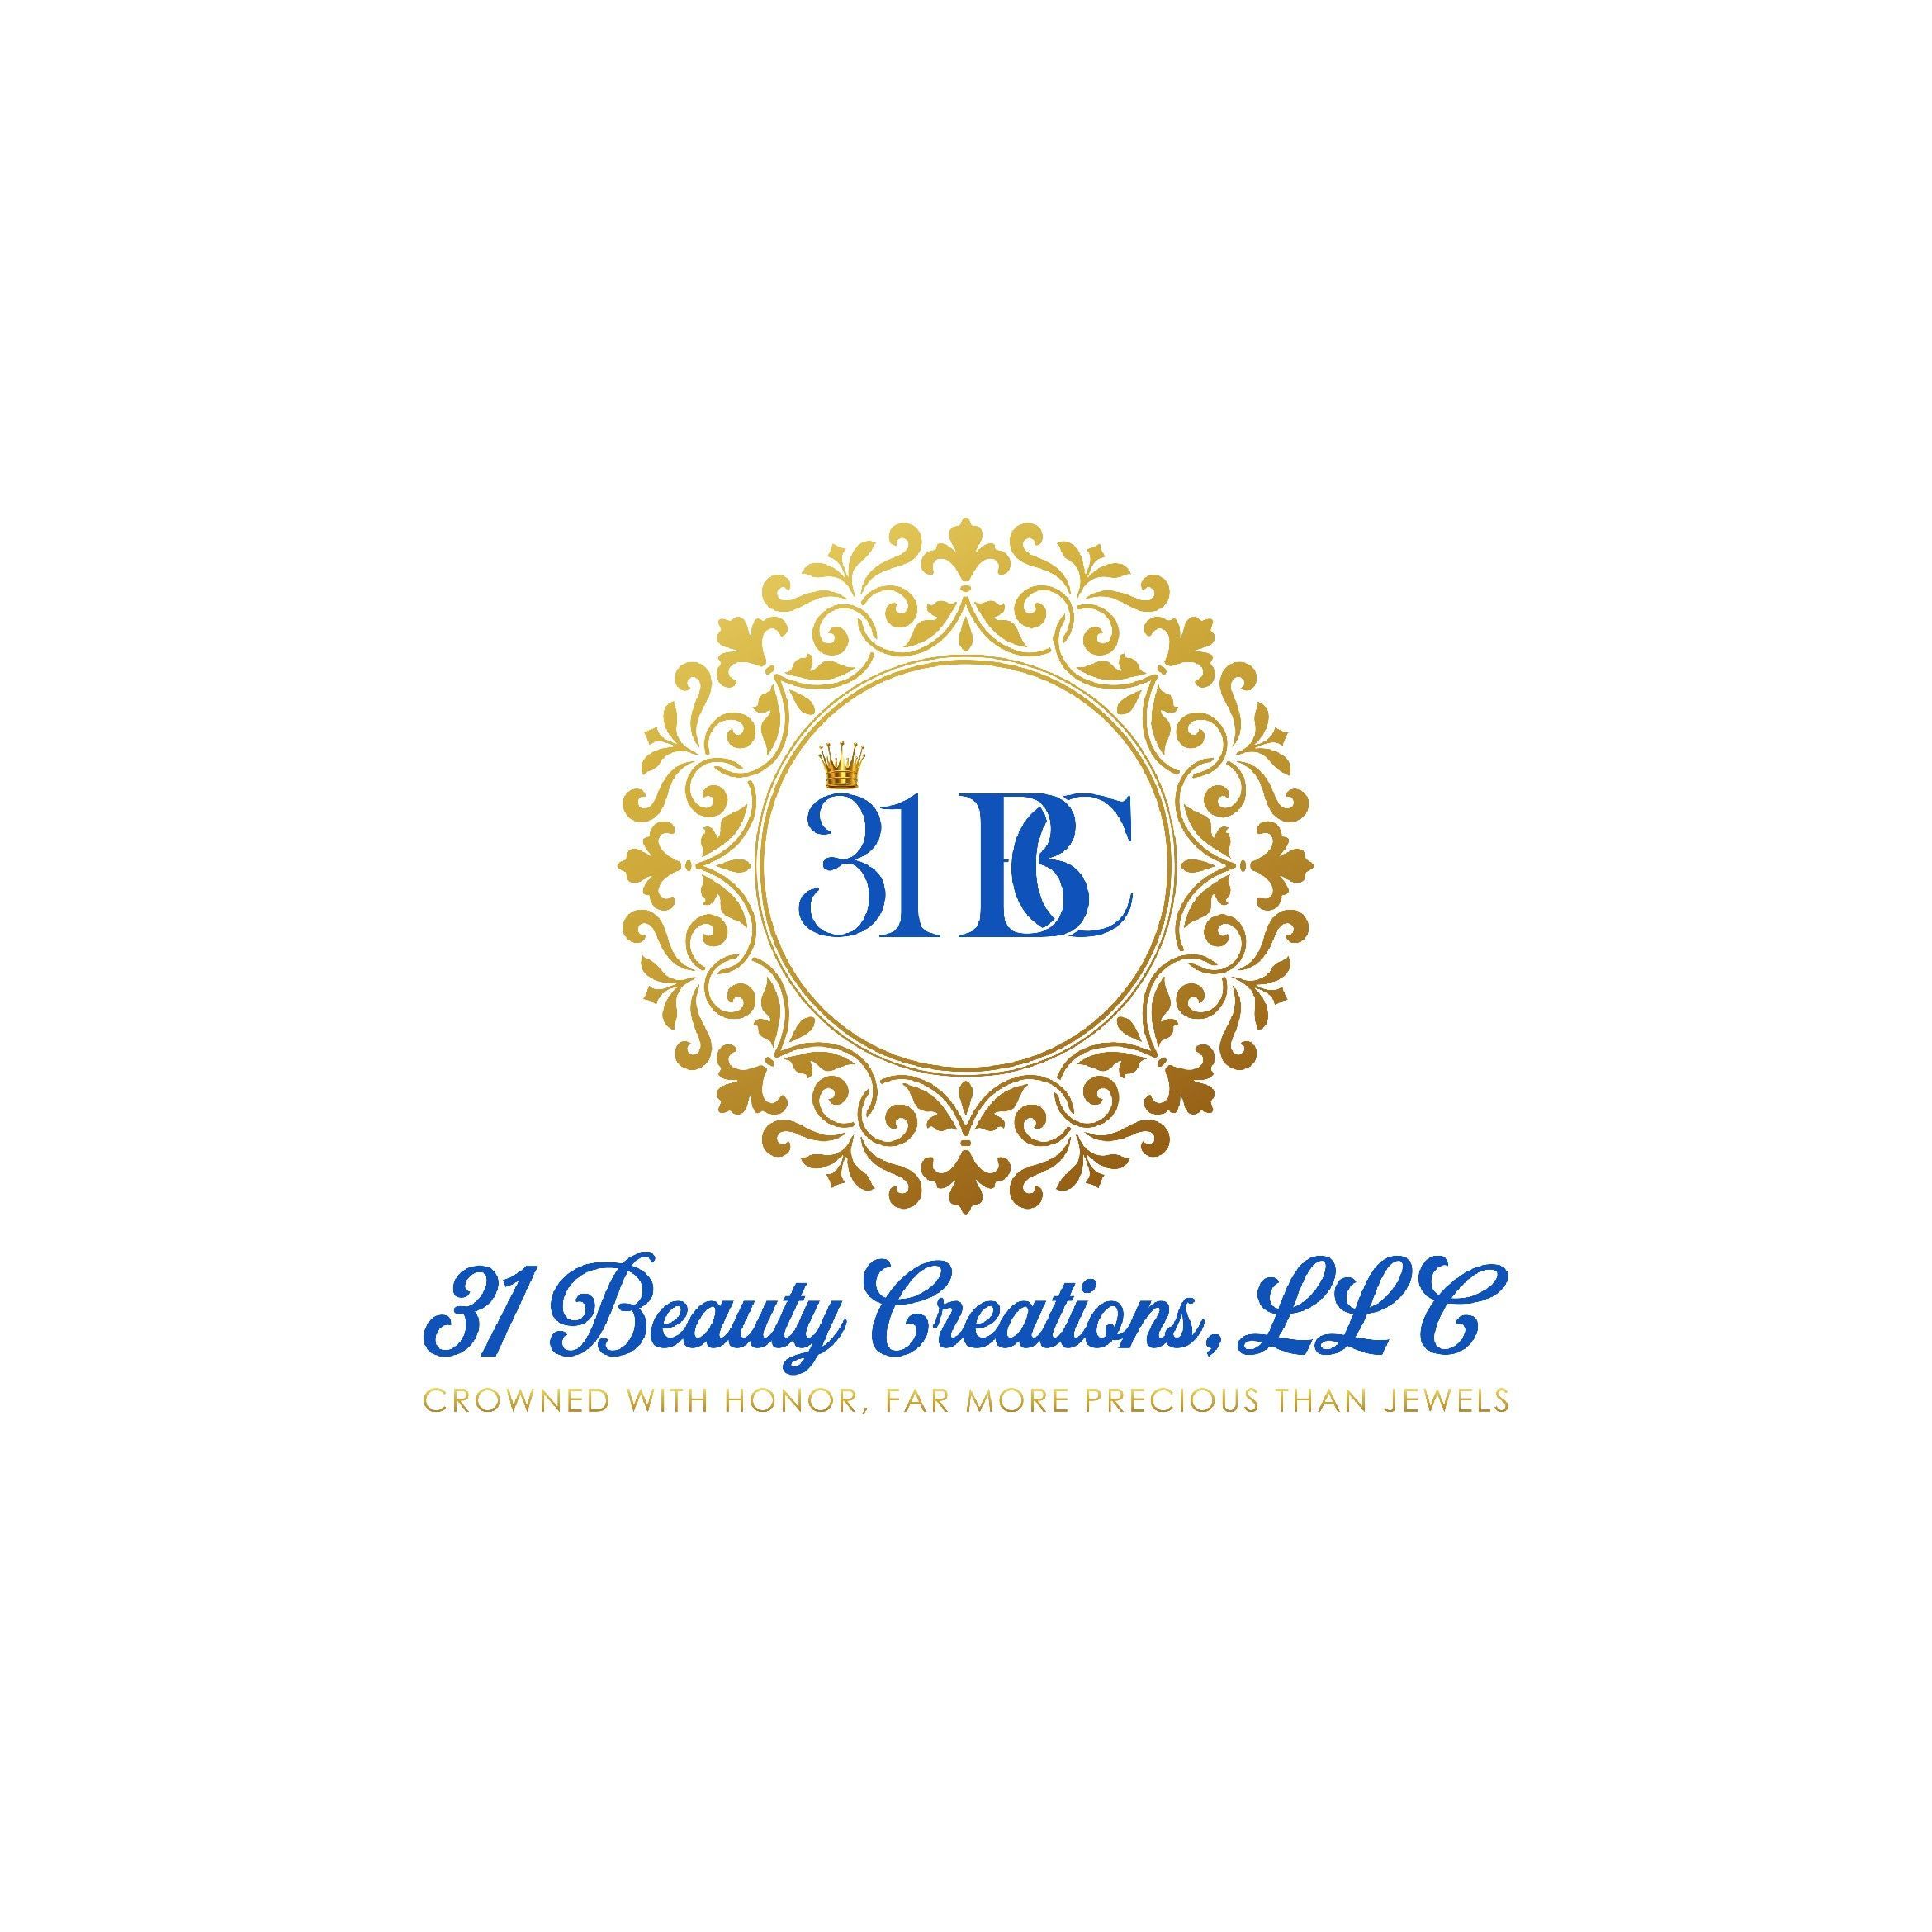 31 Beauty Creations, LLC, 2121 S Hiawassee Rd, Suite 106, Orlando, 32835